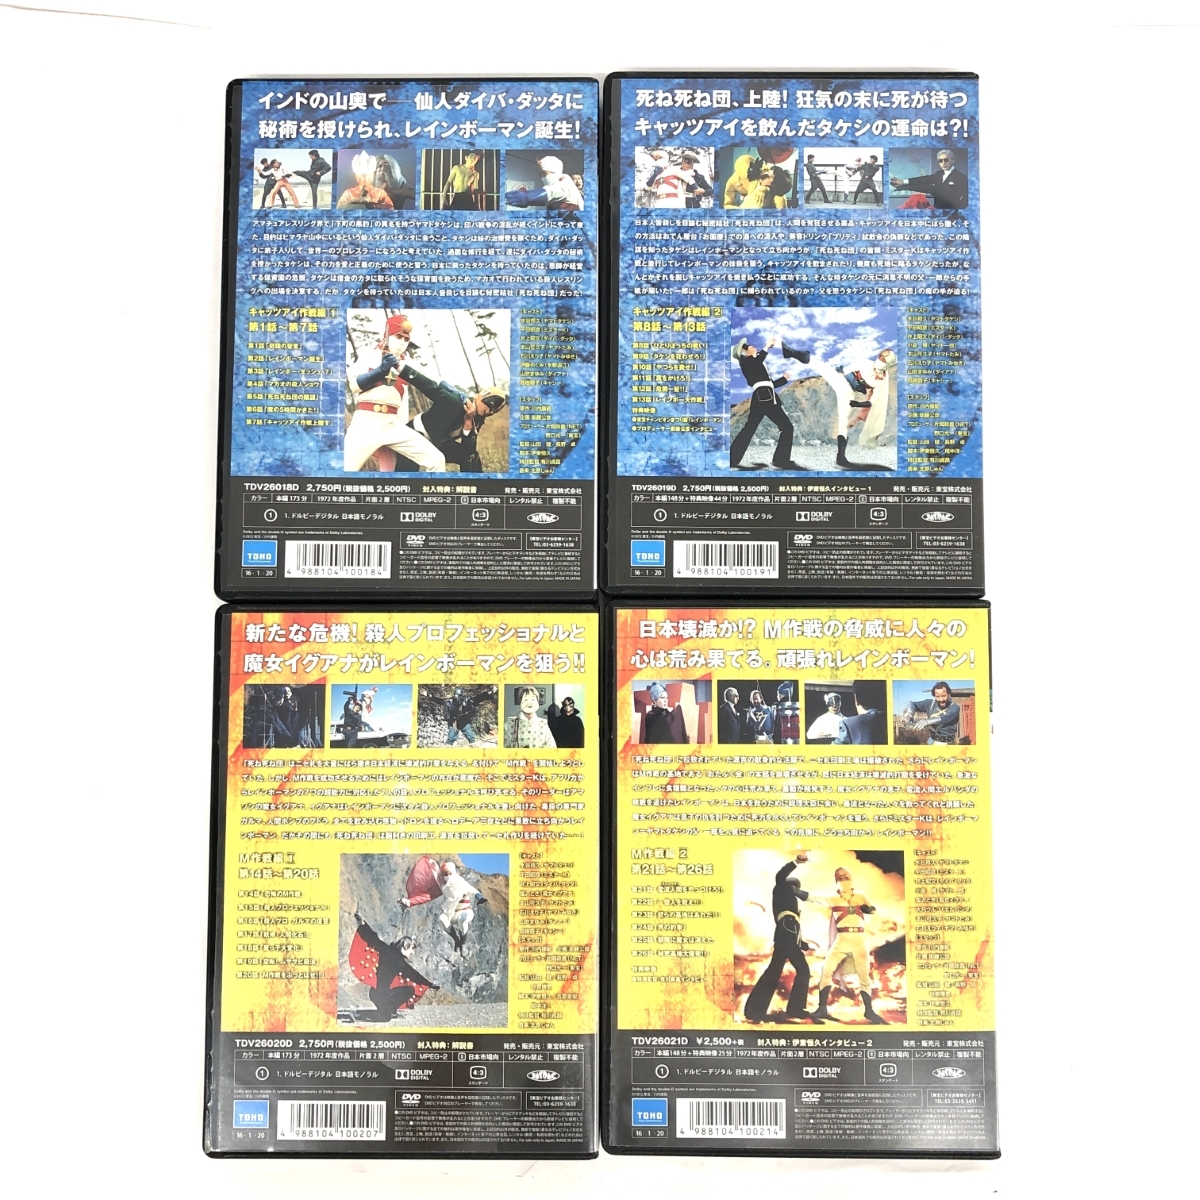  beautiful goods * higashi .TOHO love. warrior Rainbow man DVD * all 8 volume set disk 